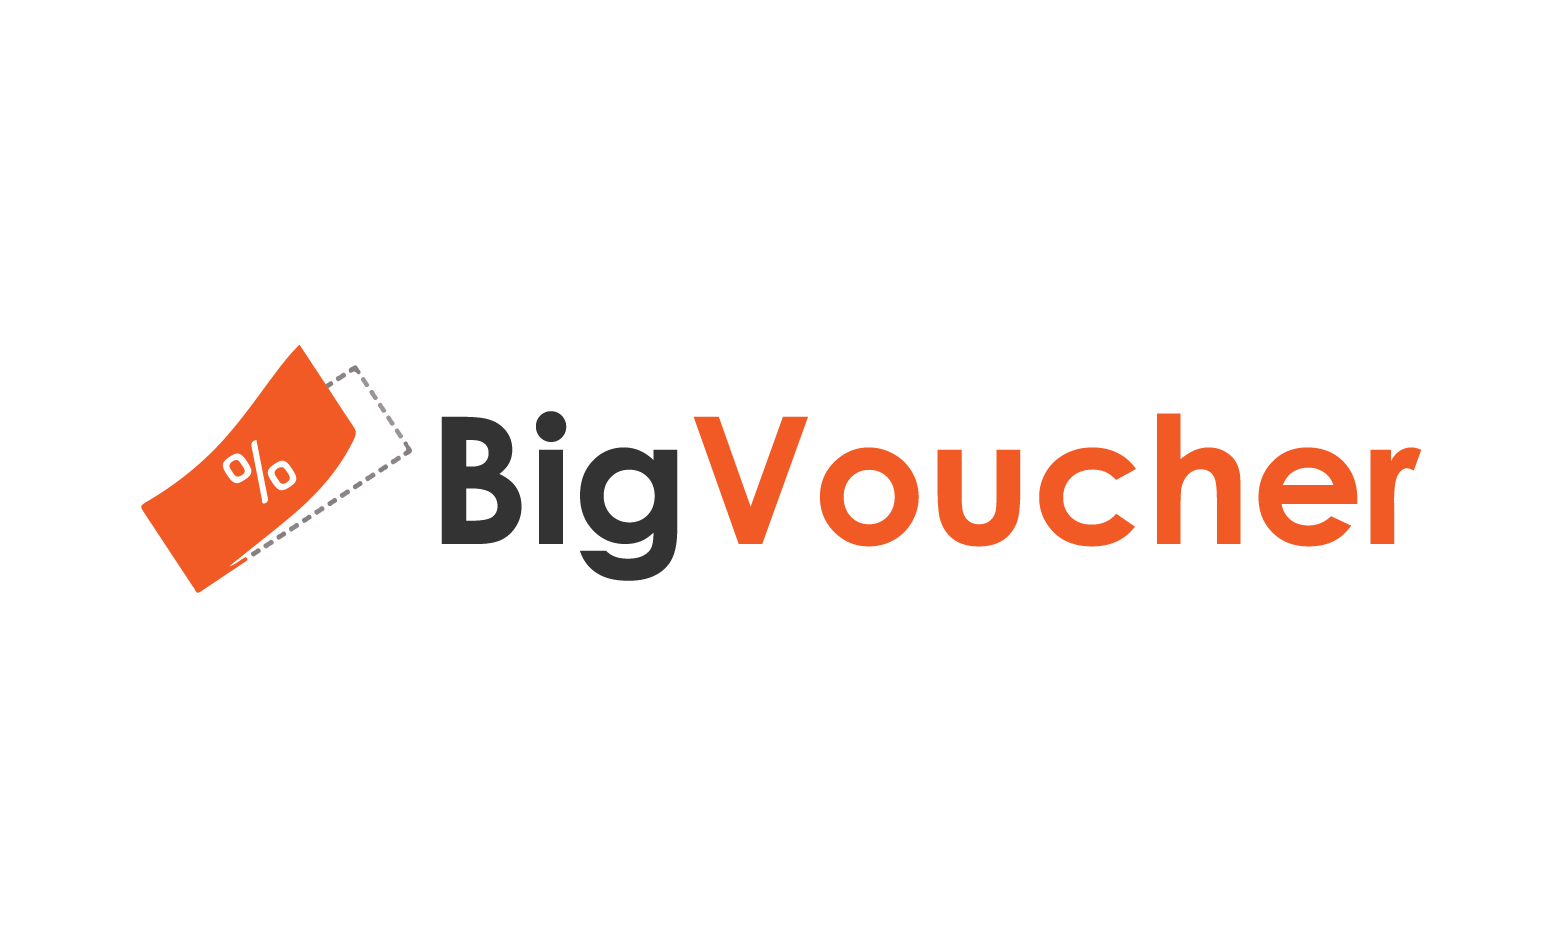 BigVoucher.com - Creative brandable domain for sale